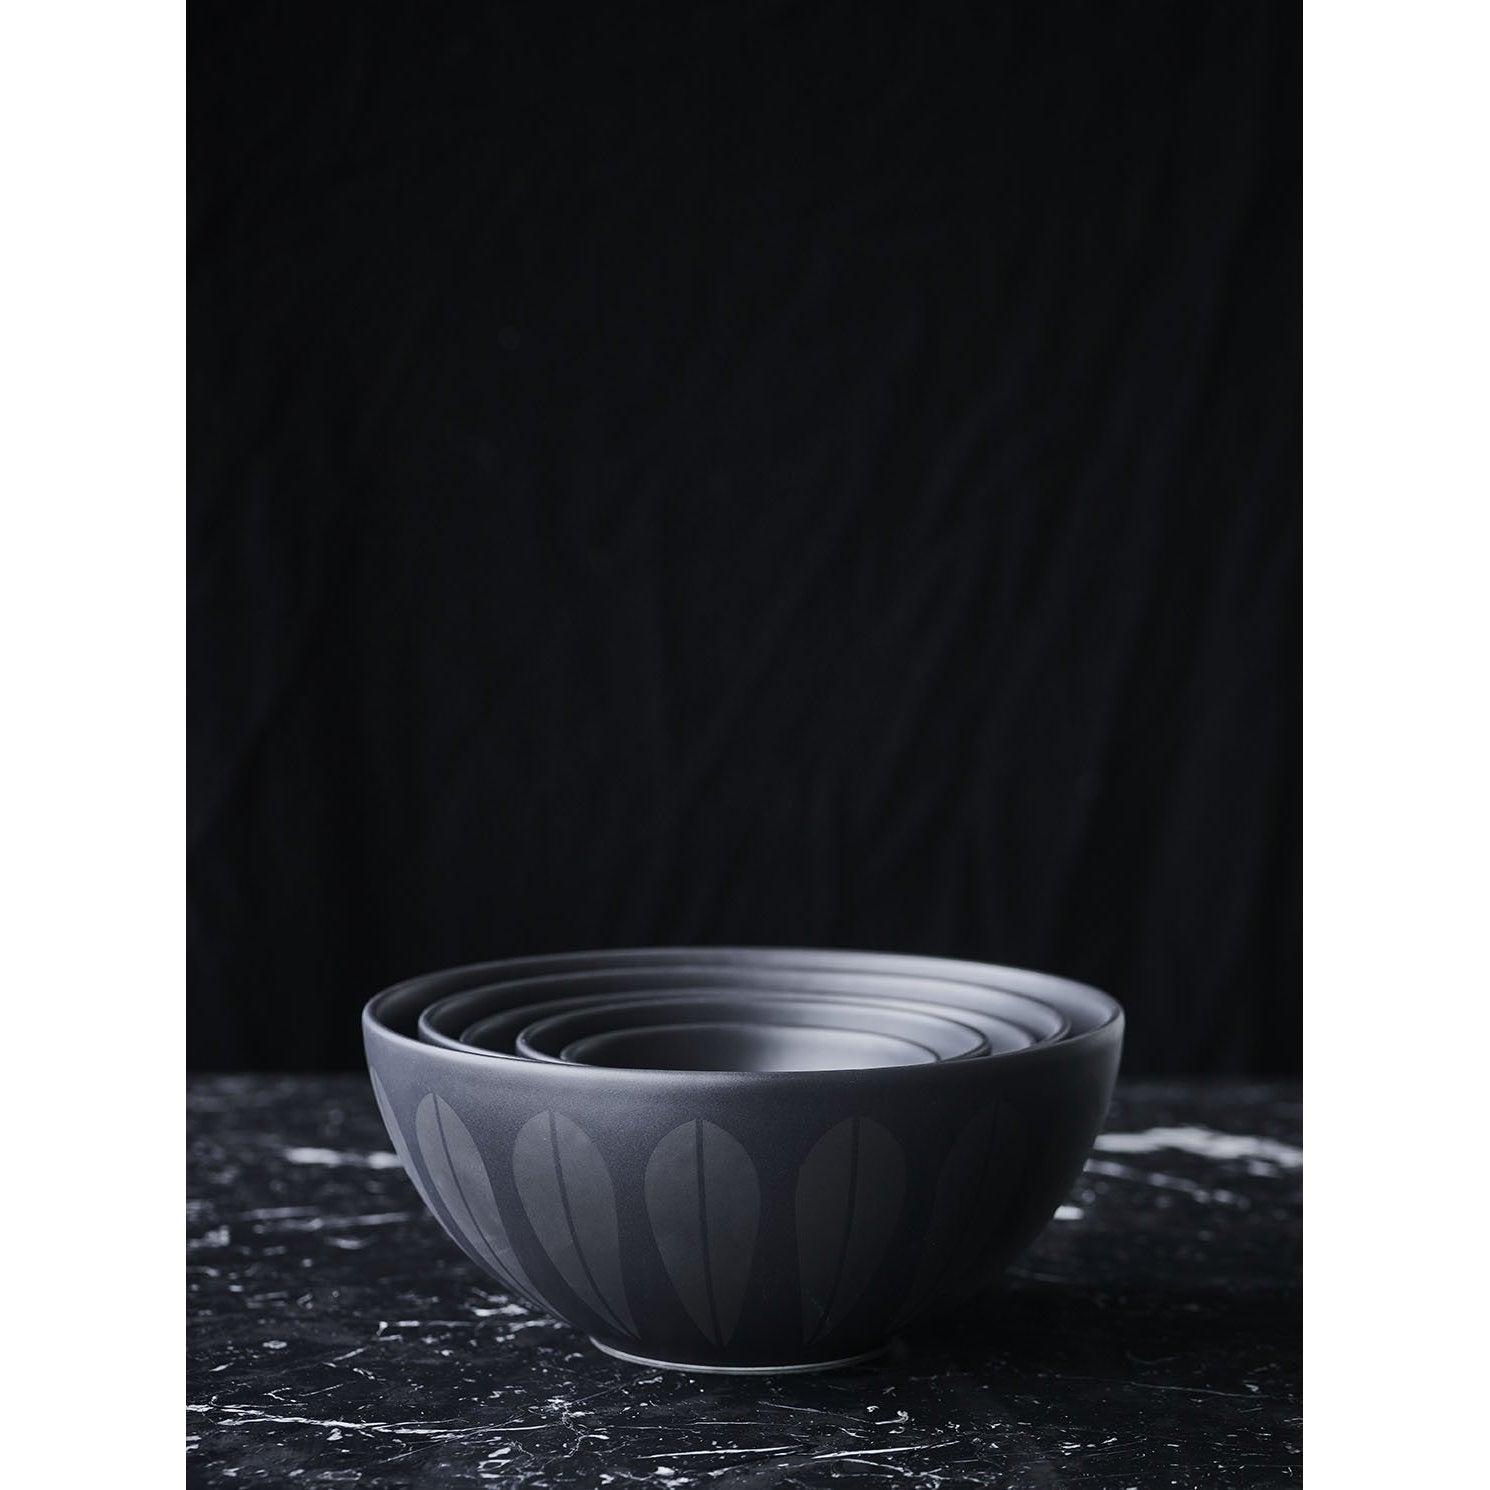 Lucie Kaas Arne Clausen Bowl černá, 12 cm